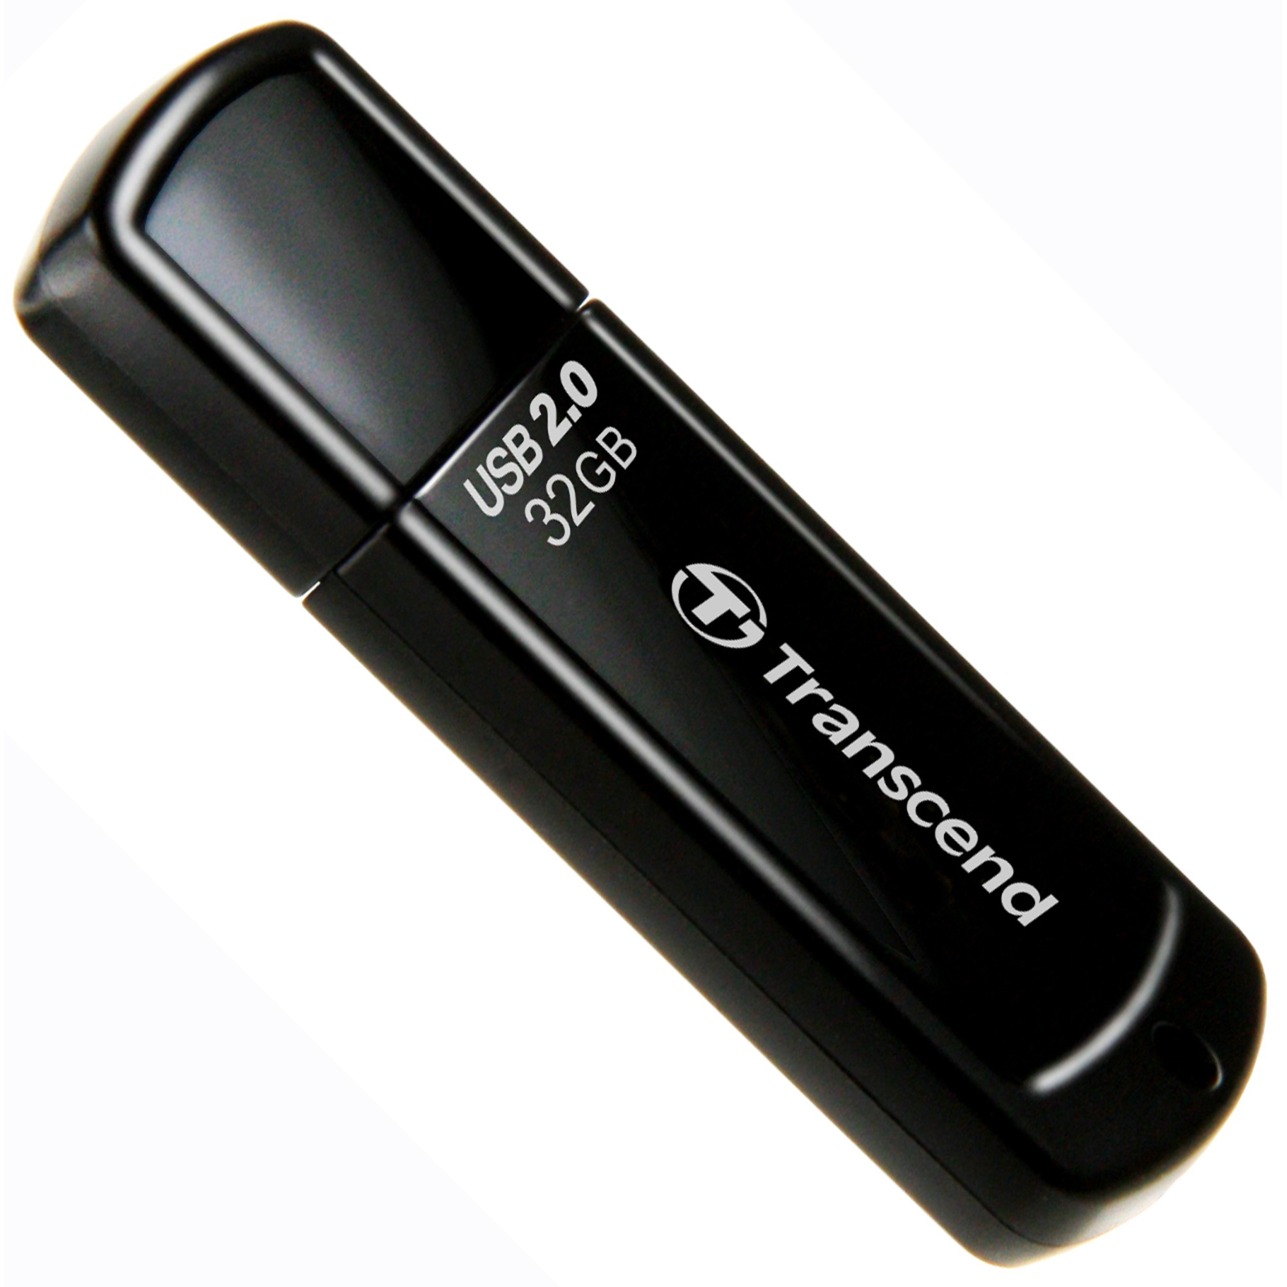 JetFlash 350 32 GB, USB-Stick von Transcend